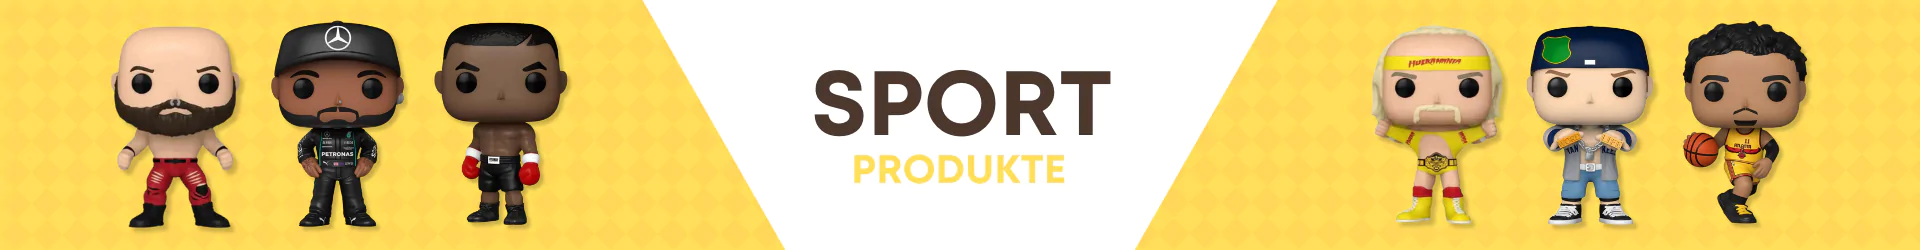 Sport Producte banner